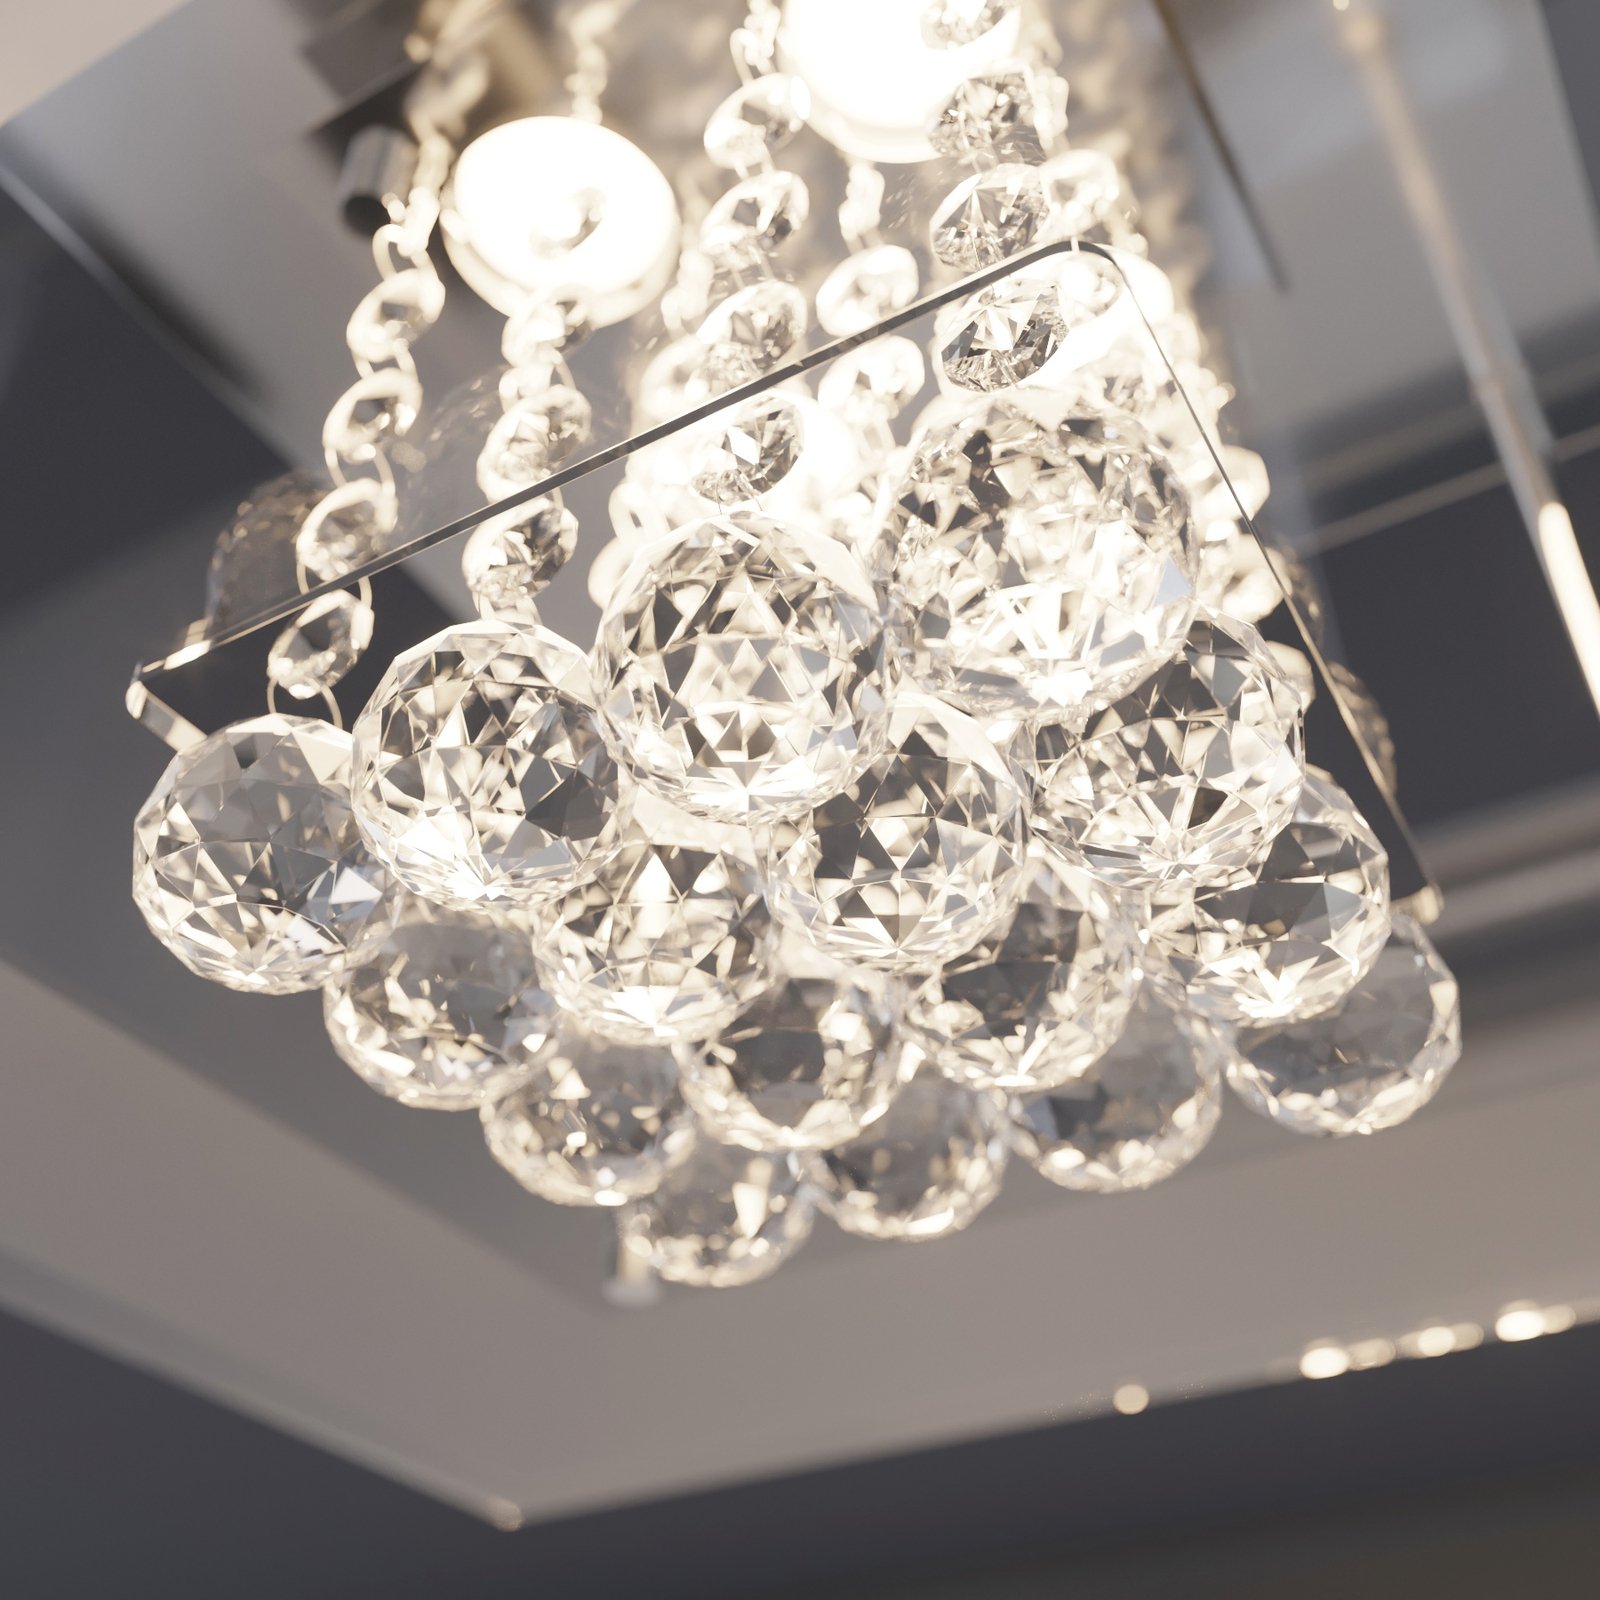 Lisandra - lampada LED da soffitto per bagno